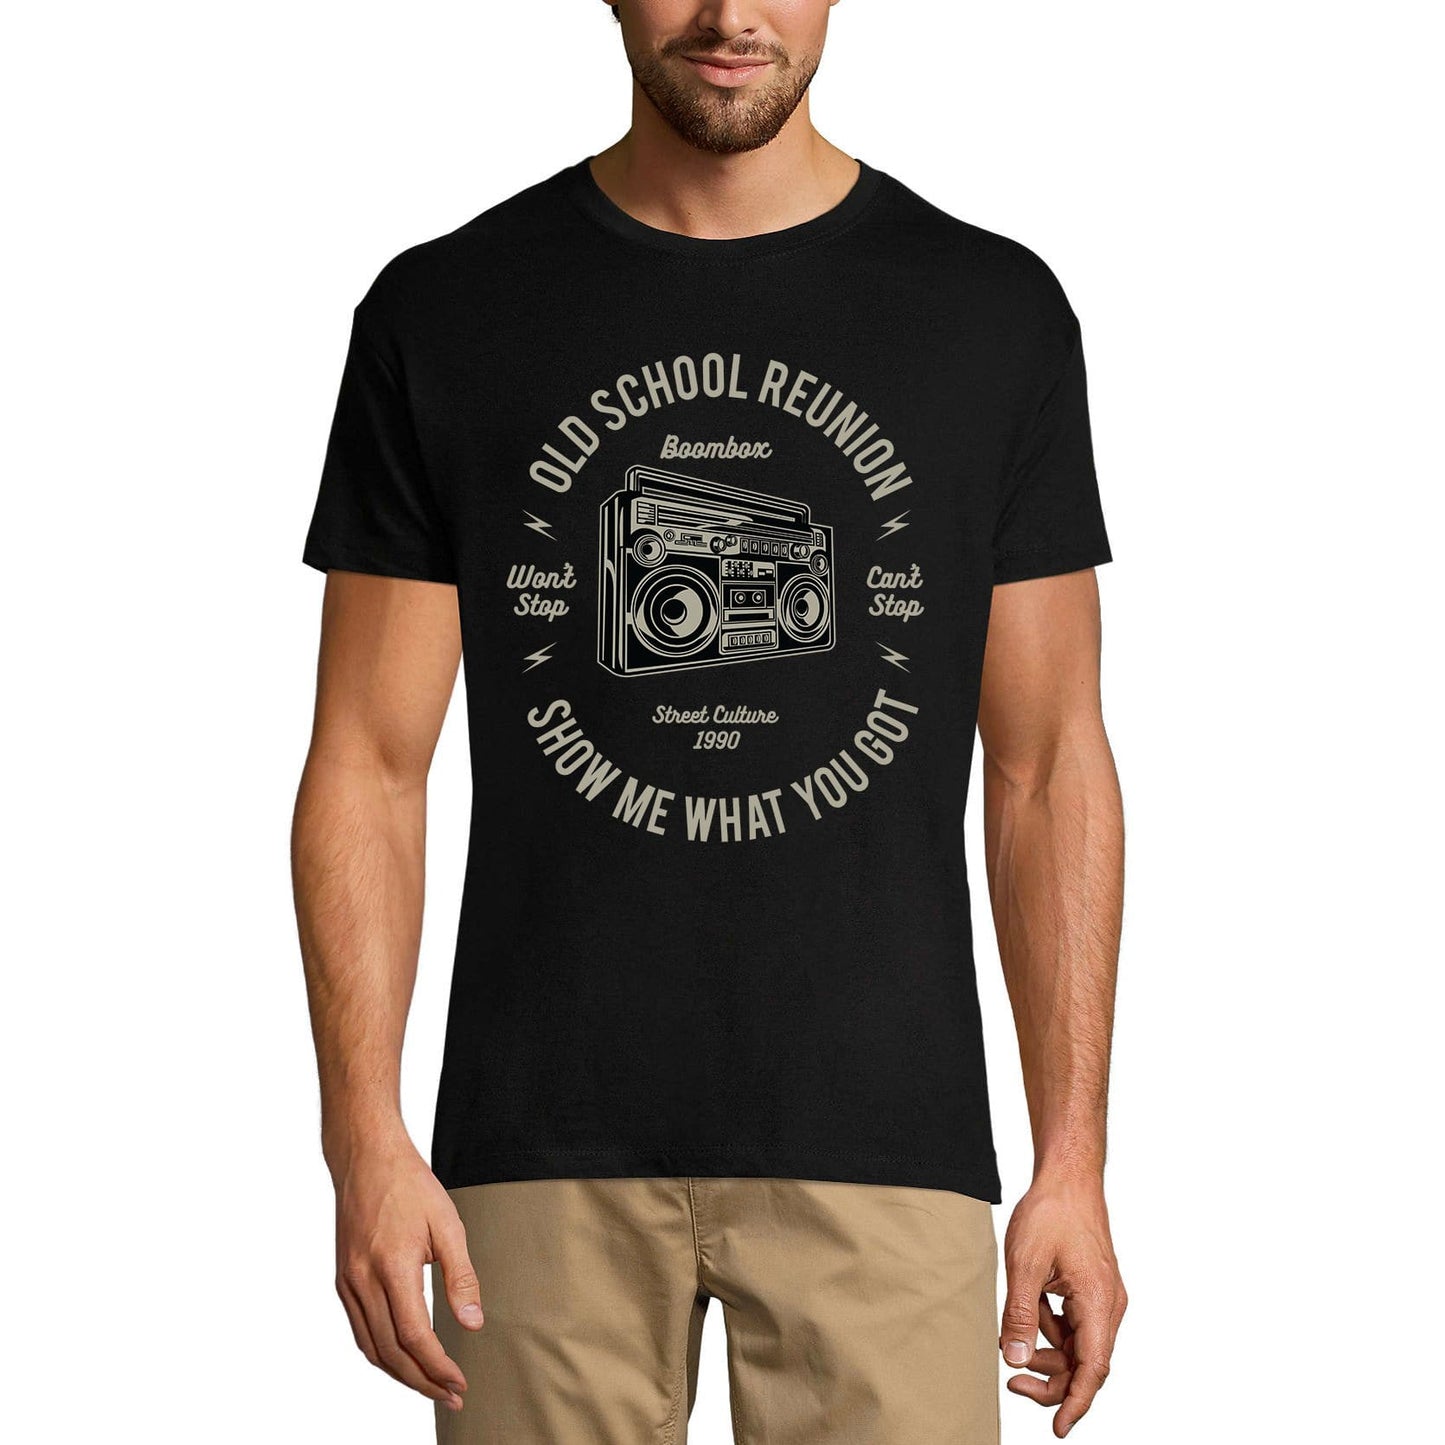 ULTRABASIC Men's Music T-Shirt Boombox Old School Reunion - Vintage Shirt for Men